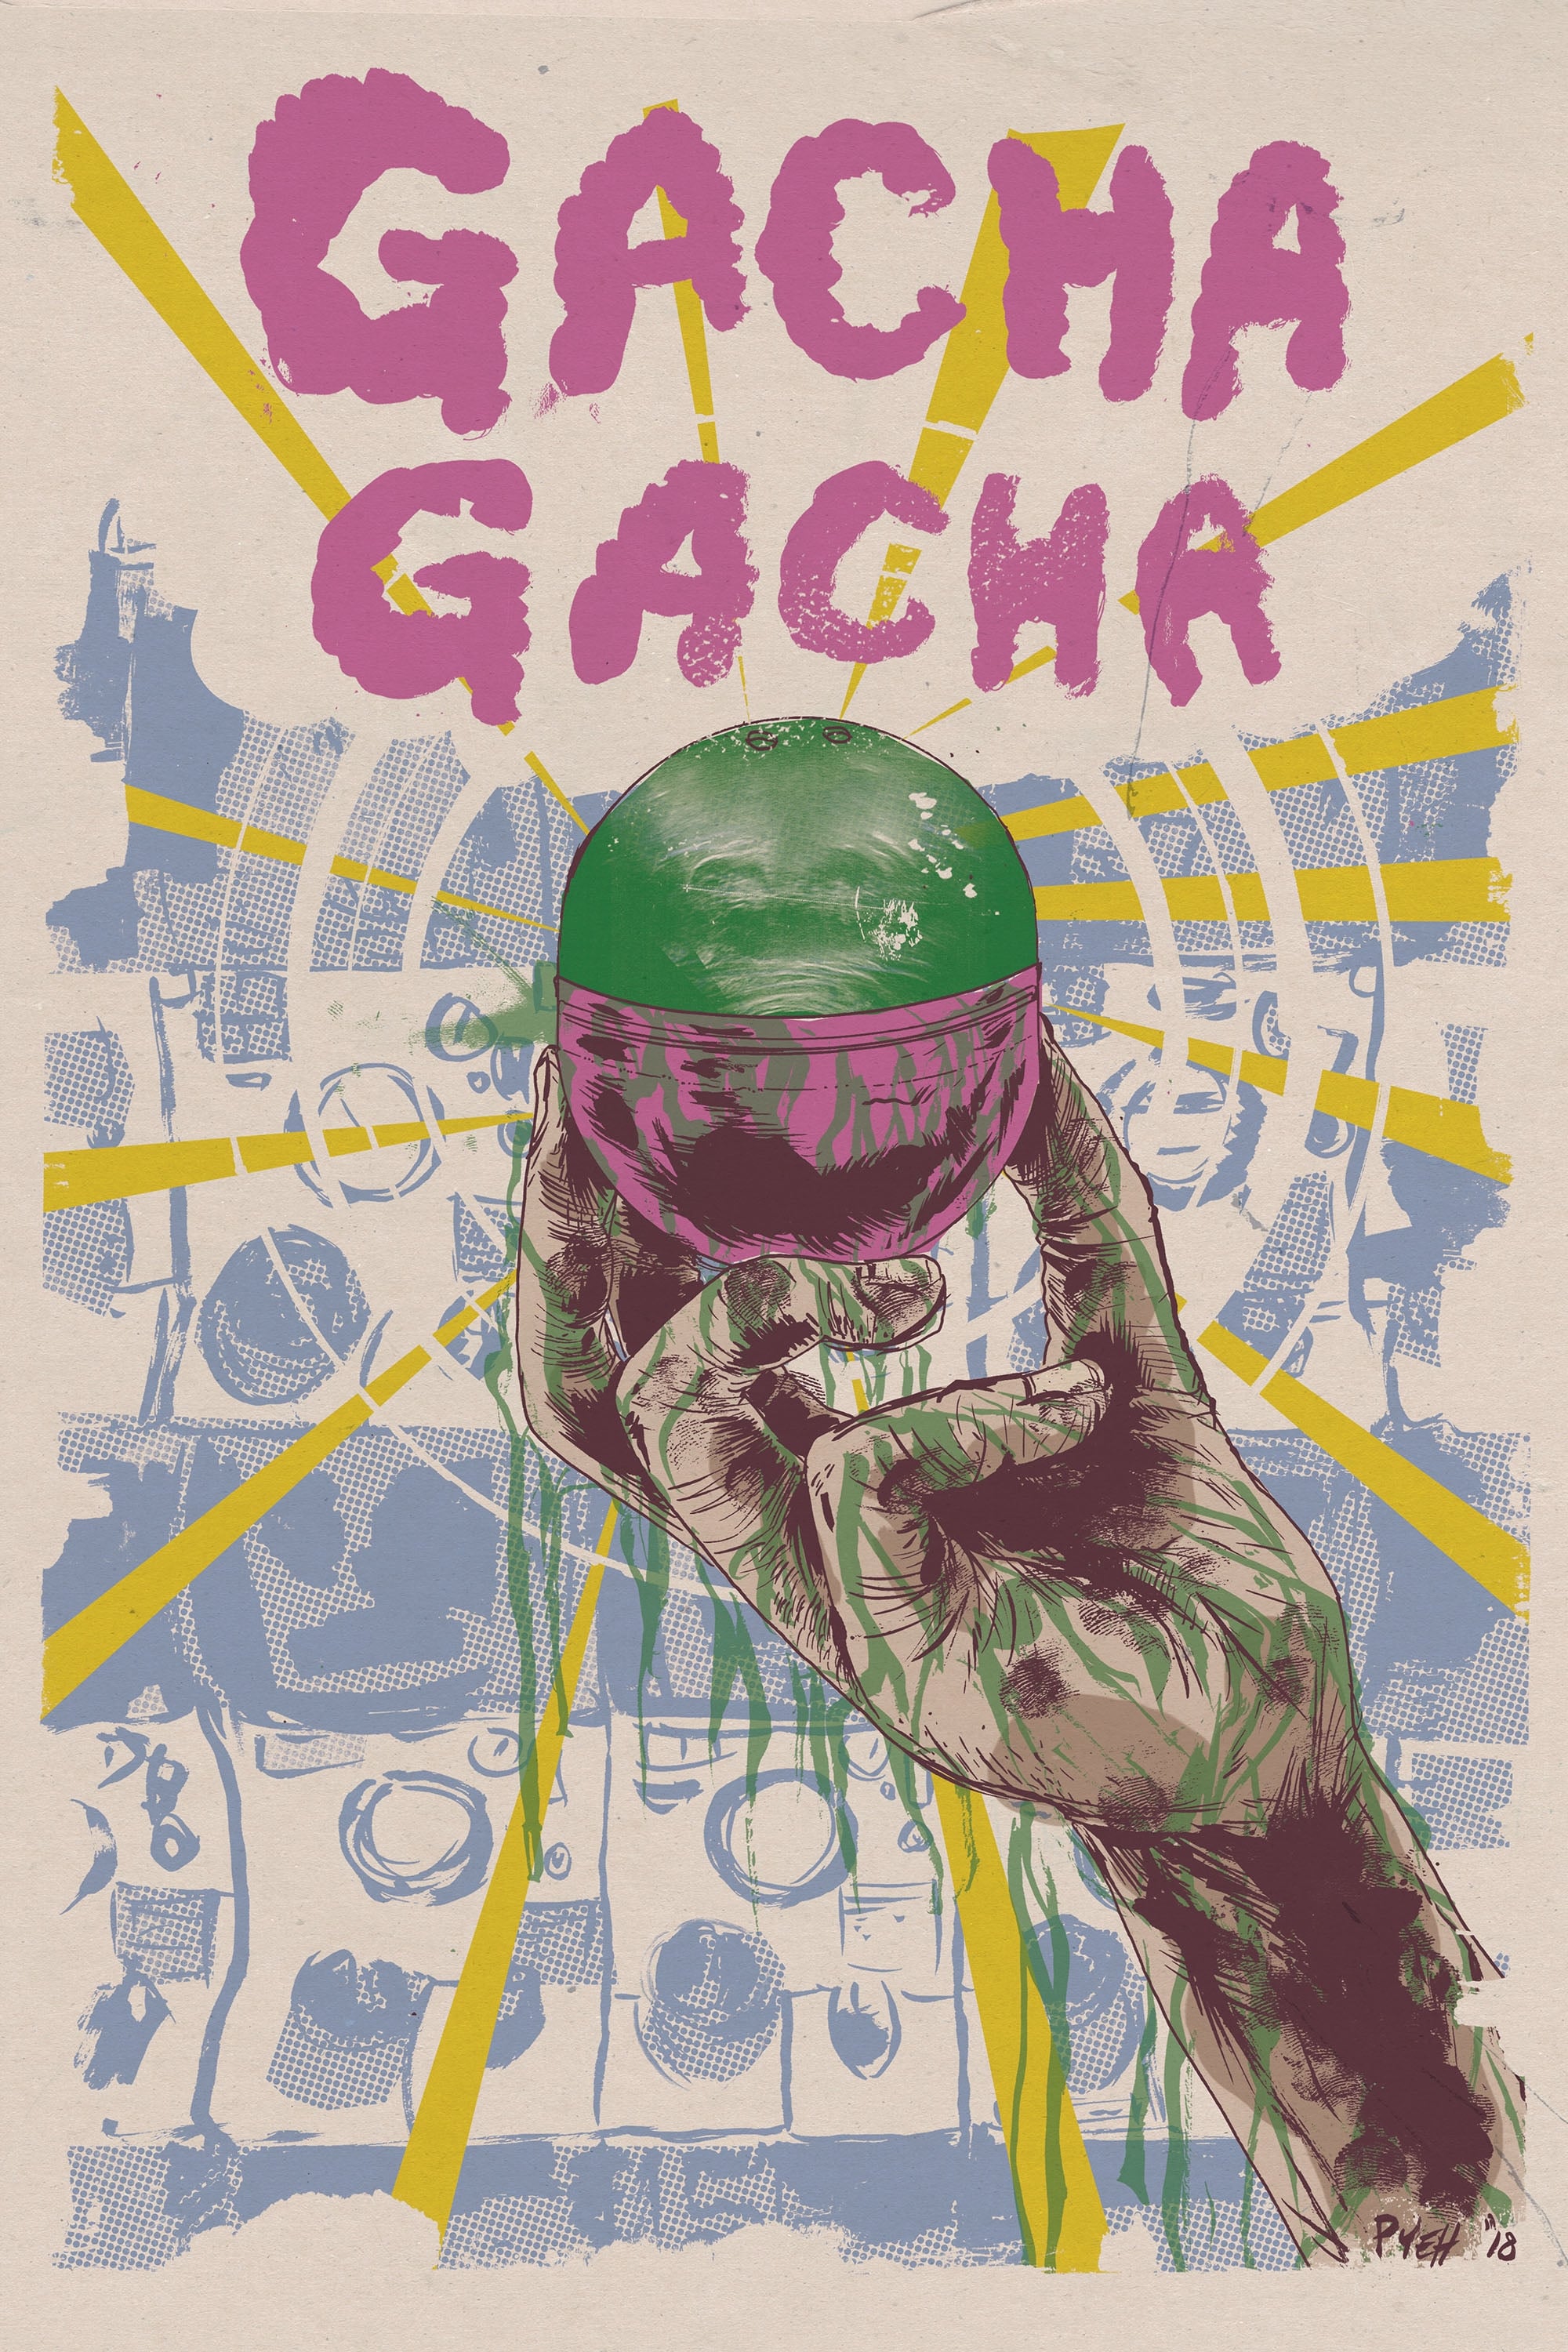 Gacha Gacha (2018)